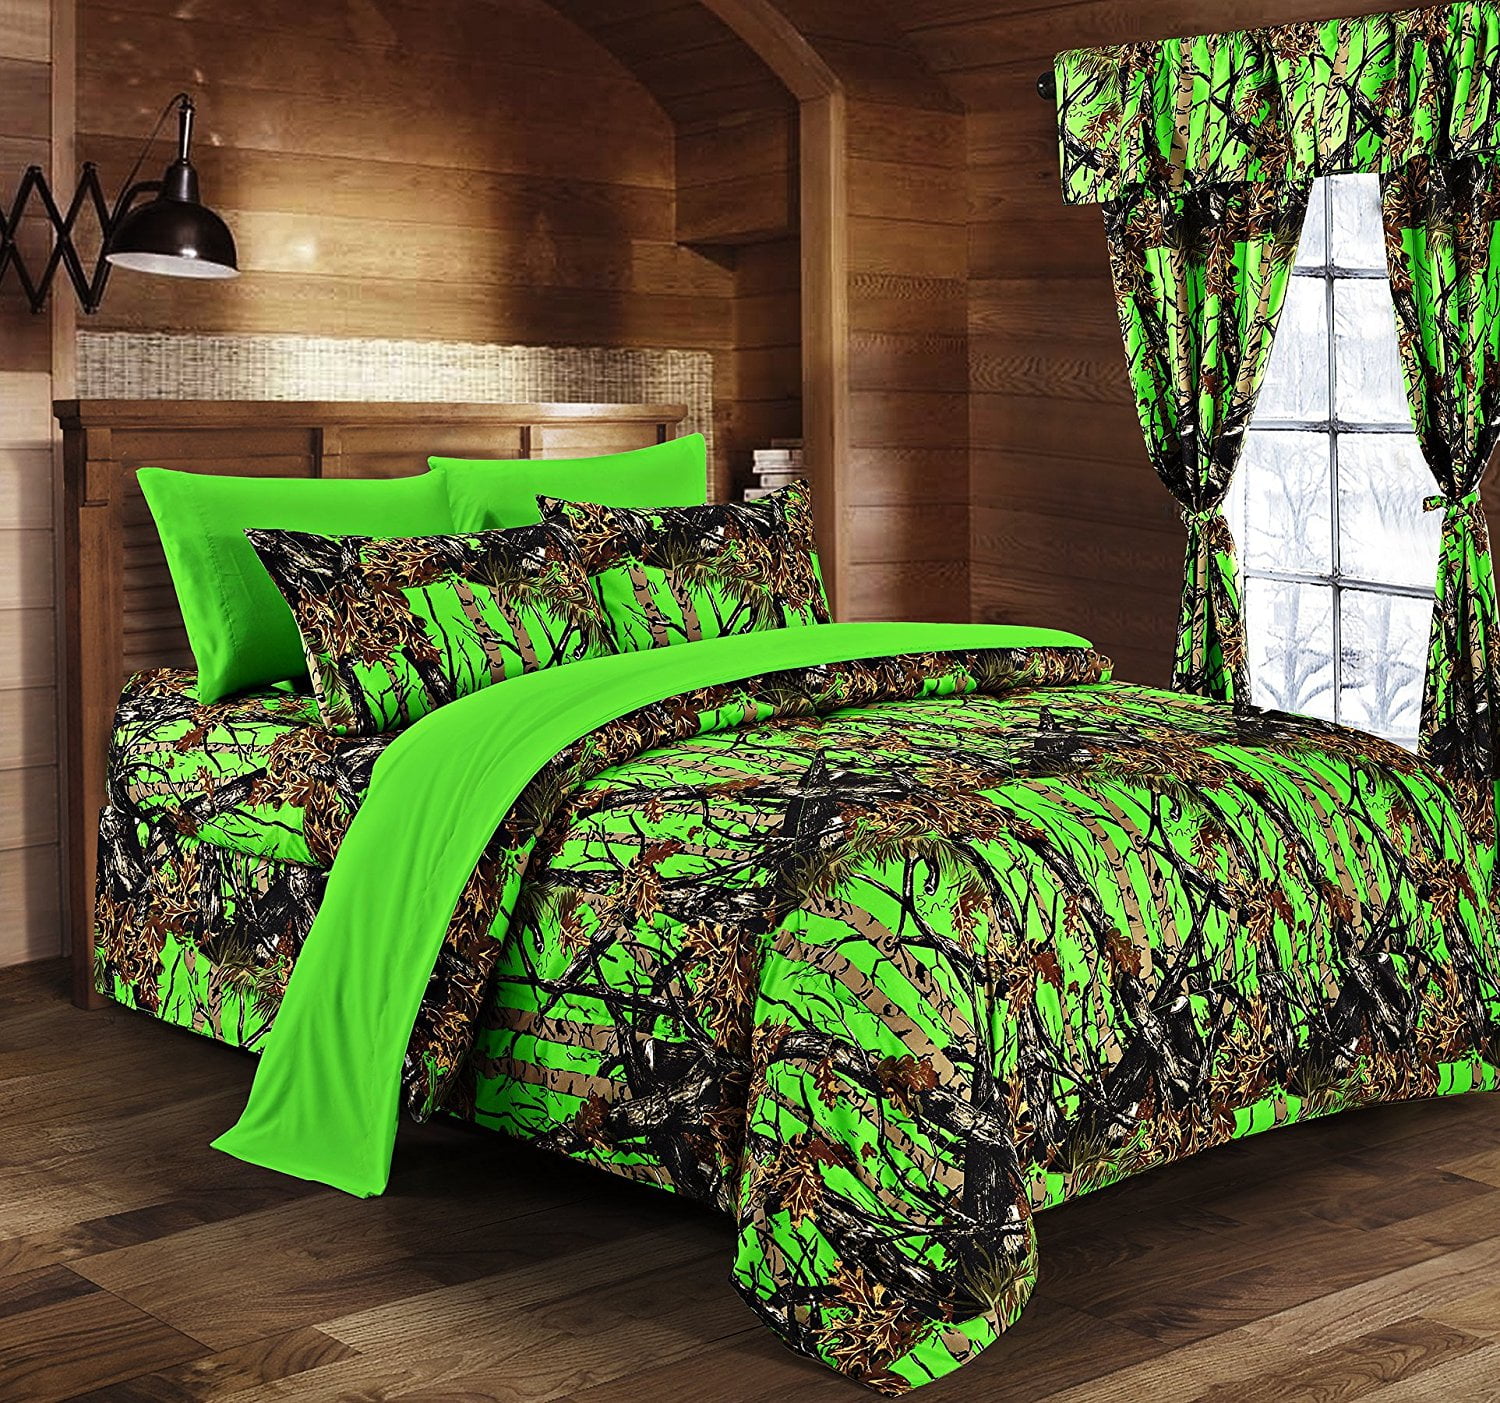 The Woods Navy Camo Full Queen Size Camoflage Comforter